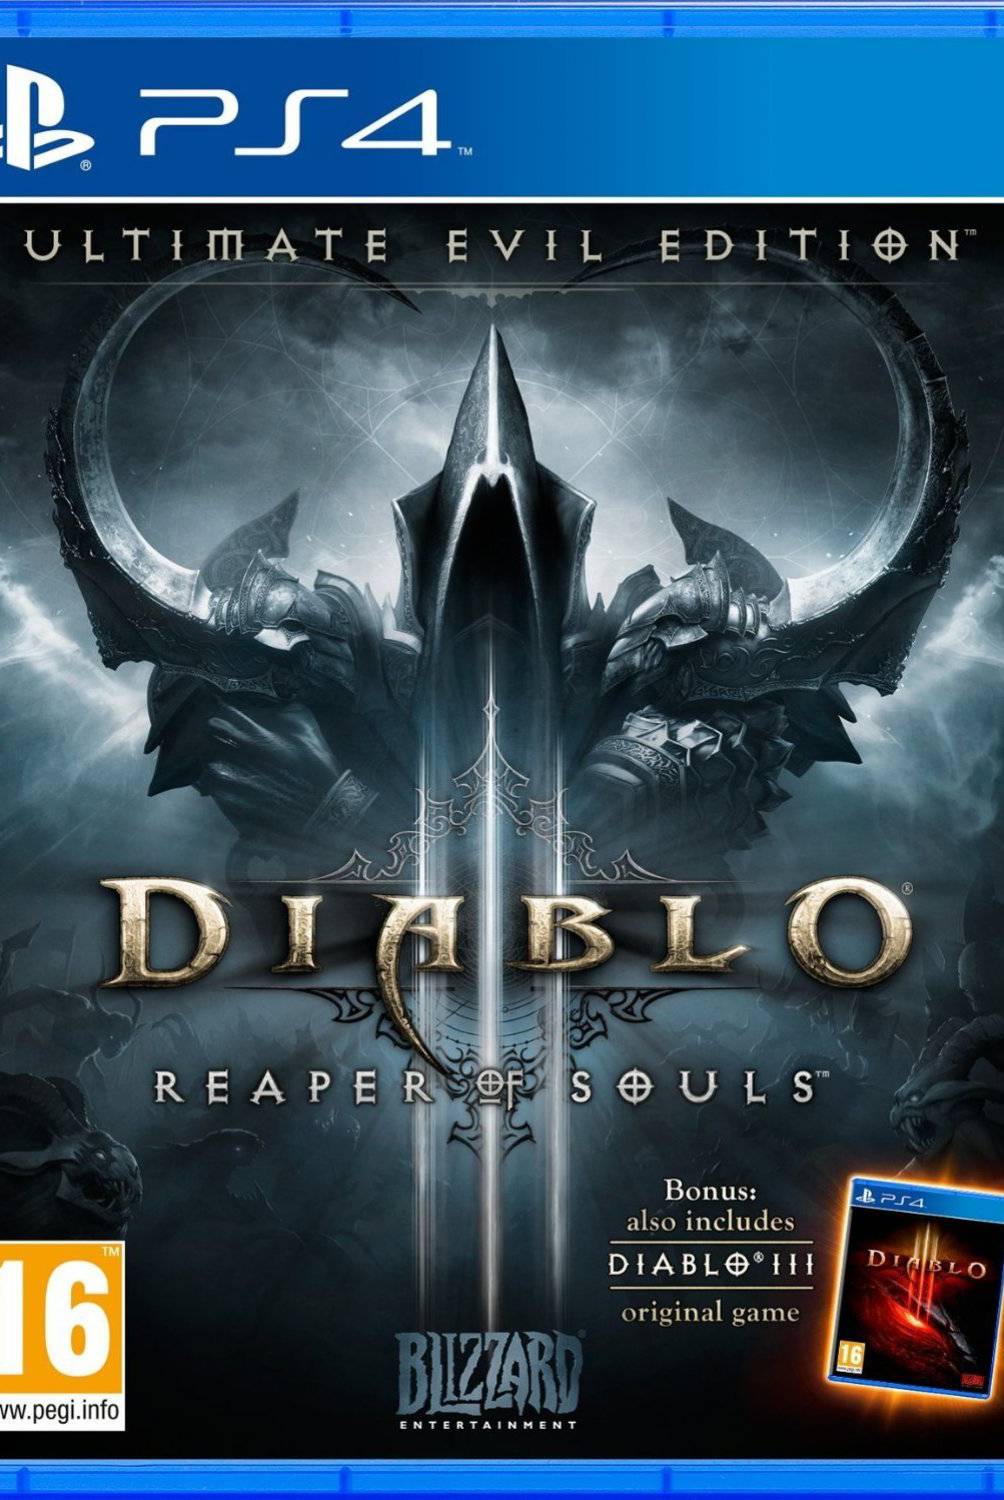 SONY - Diablo III Ultimate Evil Edition (Europeo) (PS4)